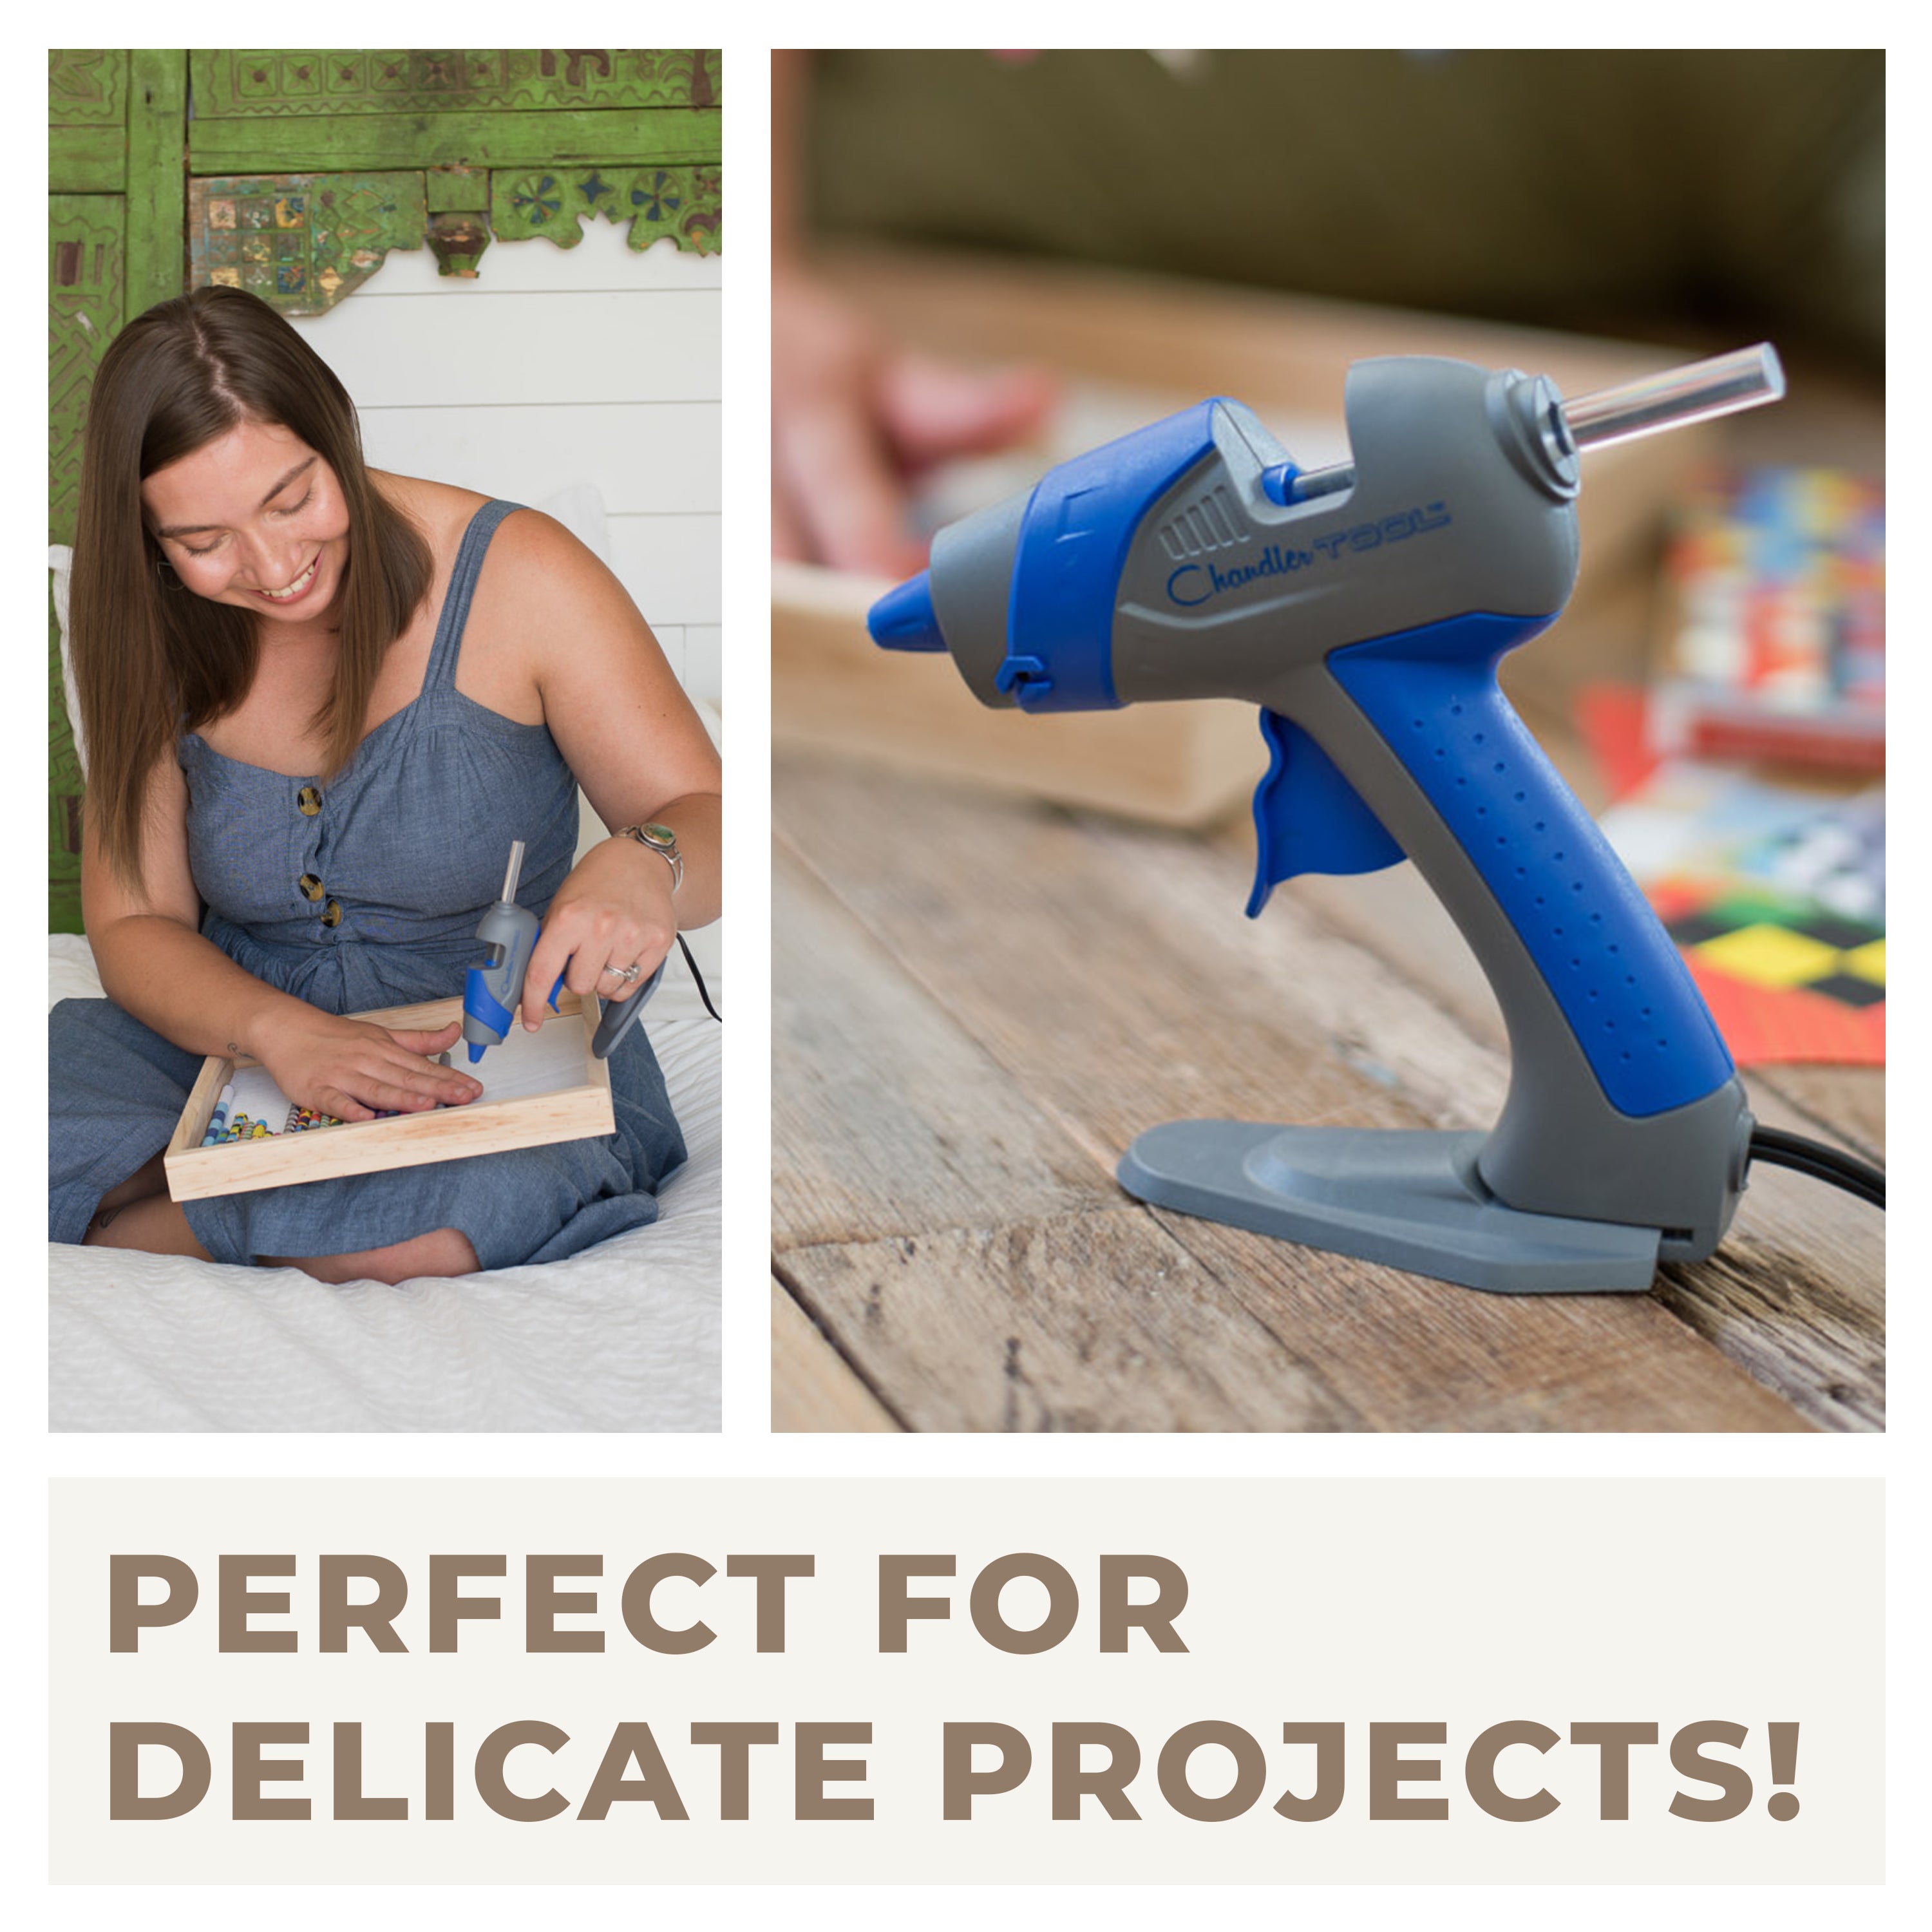 Chandler Tool Mini Glue Gun - 25 Watt - Hot Glue Sticks & Patented Base Stand Included - for Arts Crafts School Home Repair DIY (Blue)